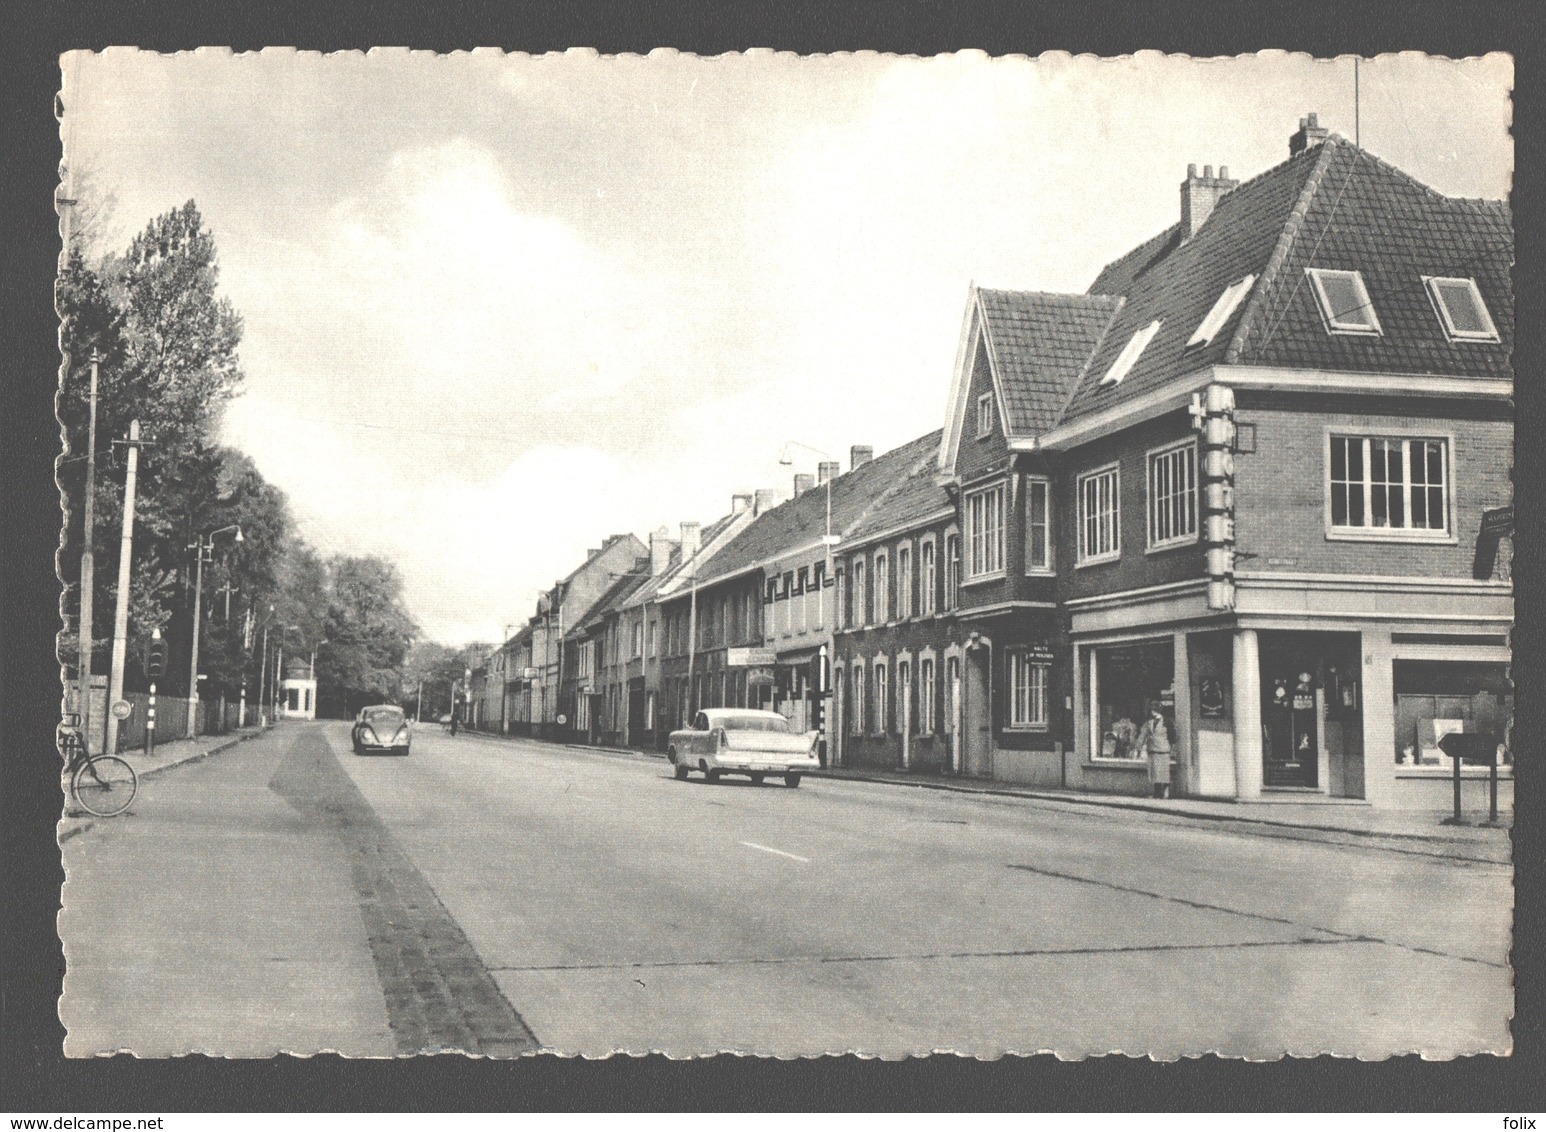 Melle - Steenweg Op Brussel - Fotokaart - Nieuwstaat - Foto Rouckhout-Pauwels Gent - Vintage Cars - VW Kever / Beetle - Melle